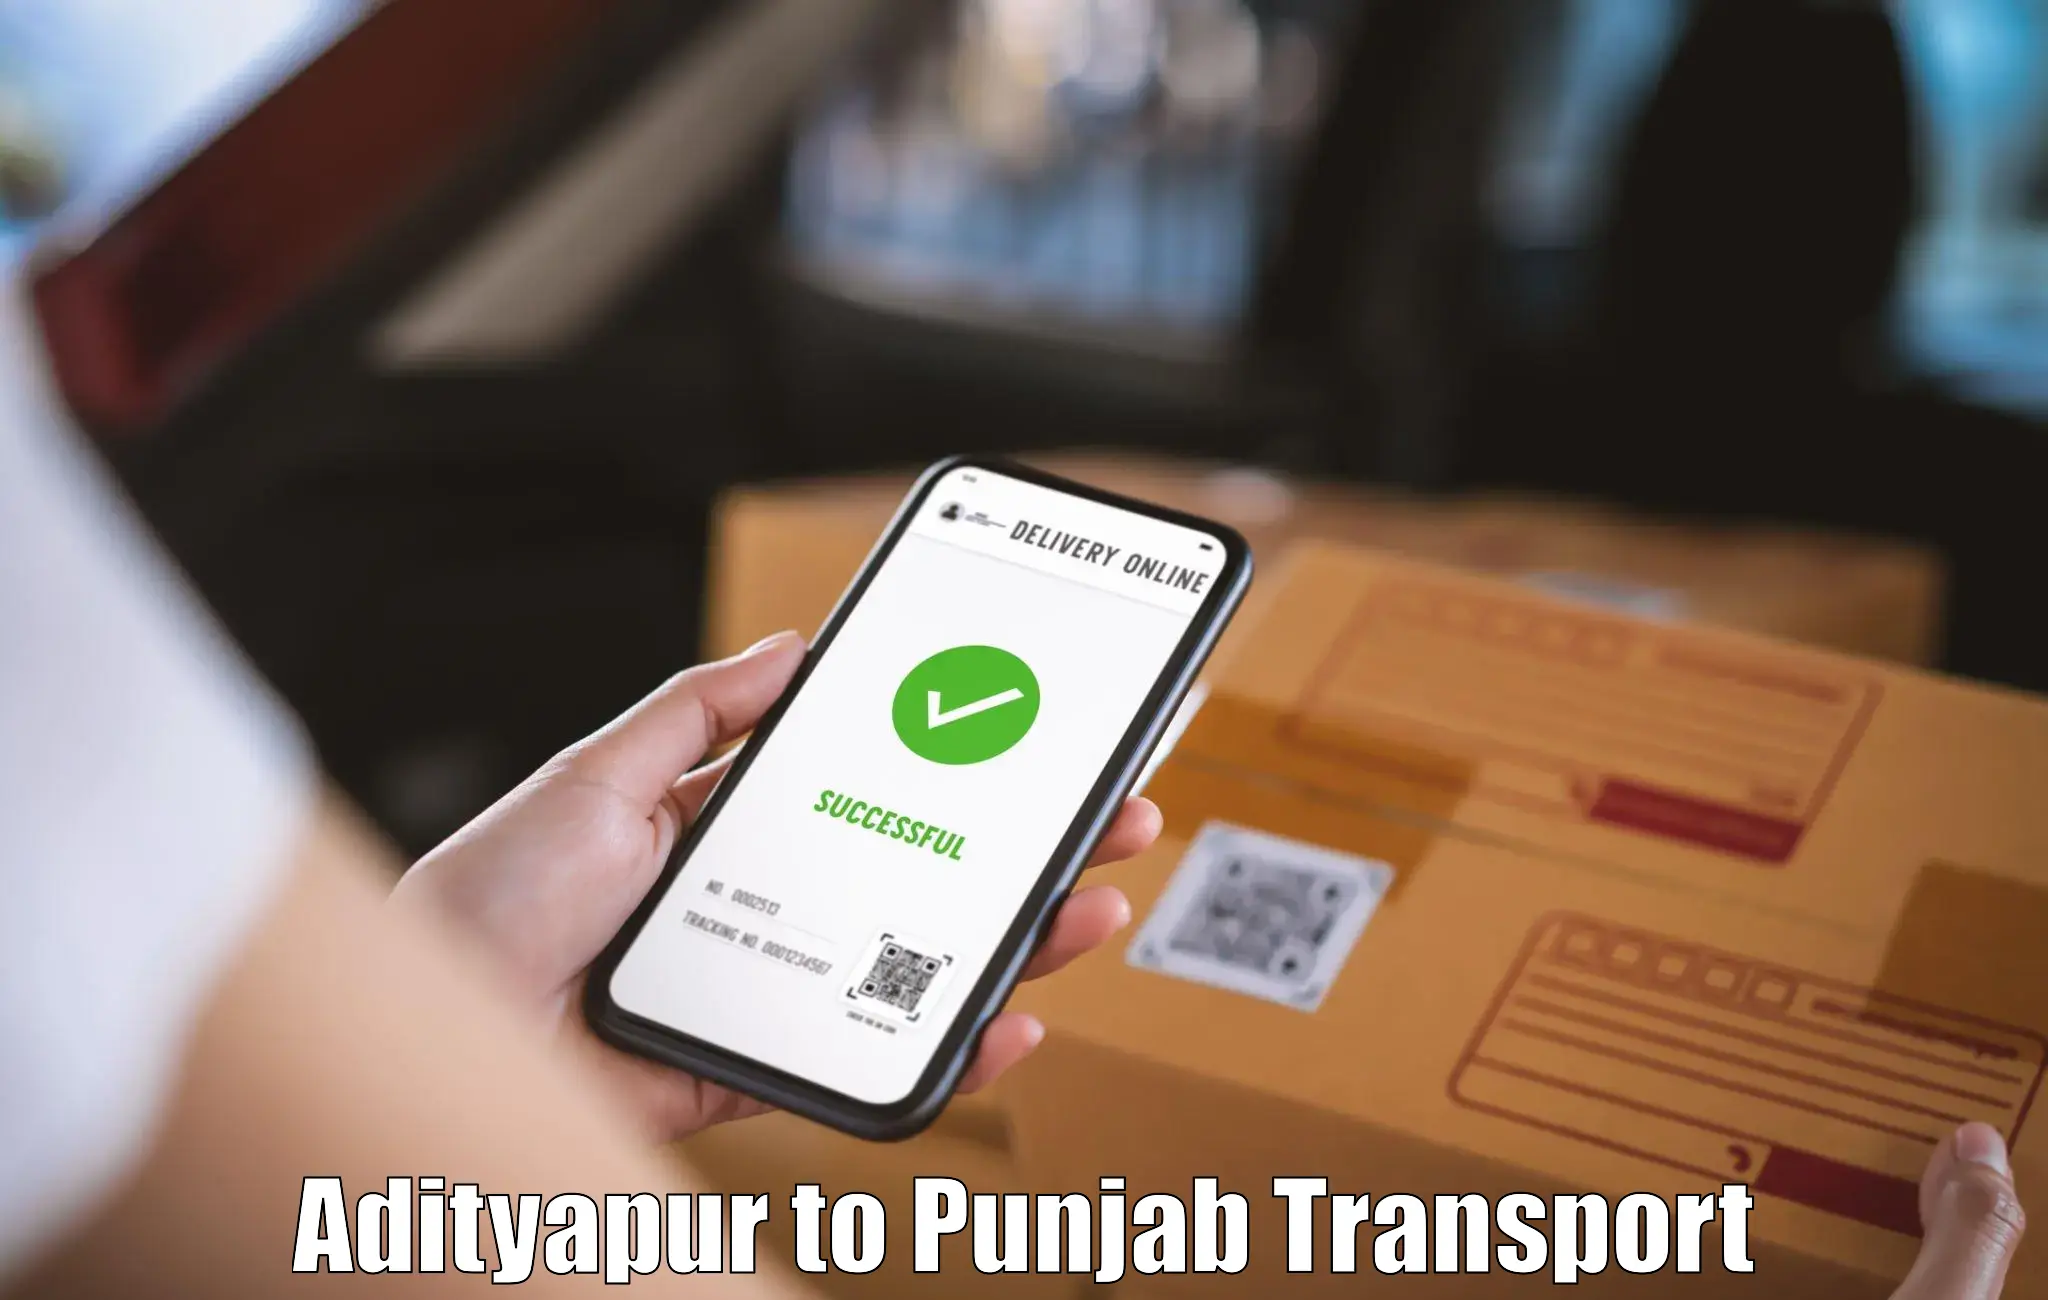 Shipping services Adityapur to Amritsar